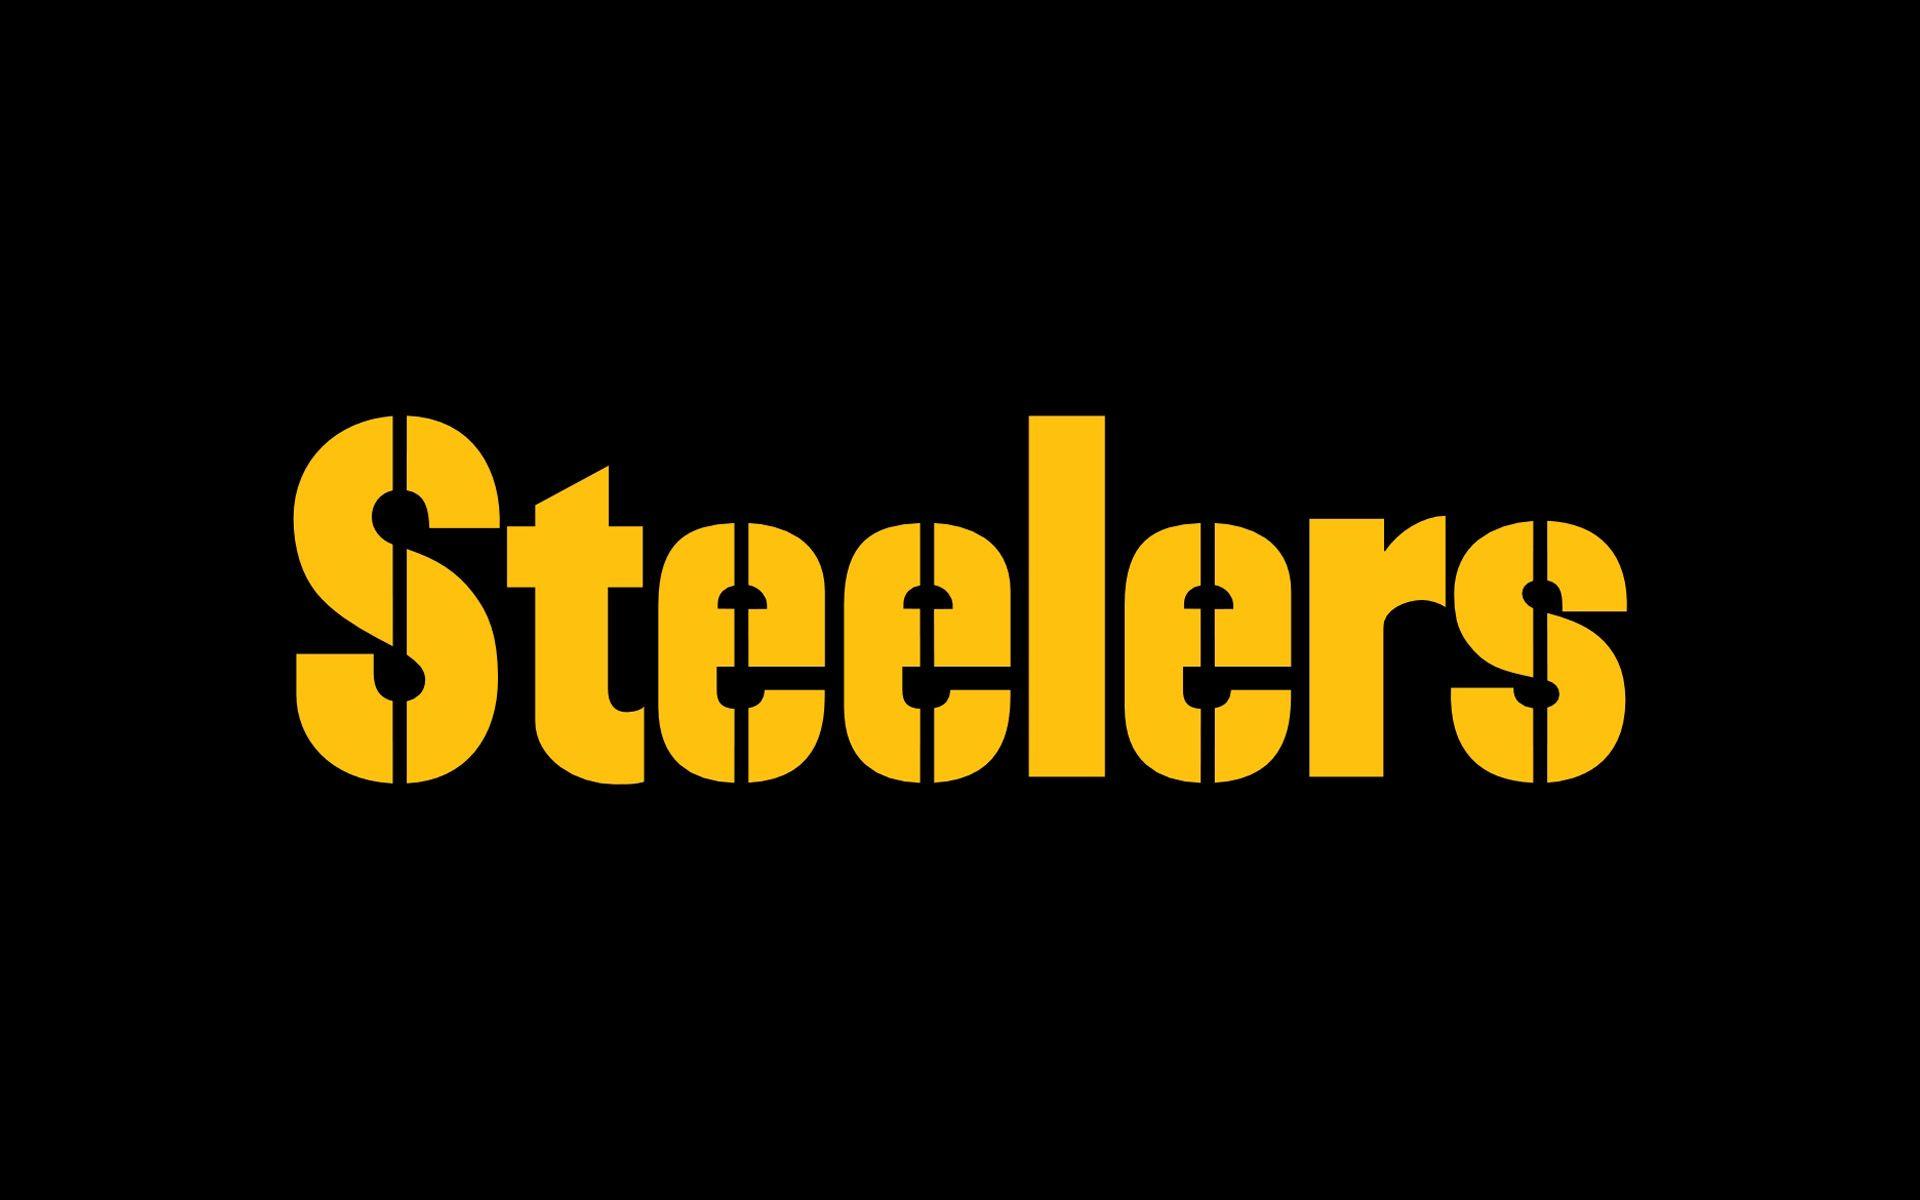 Steelers HD Wallpaper. Download HD Wallpaper, High Definition